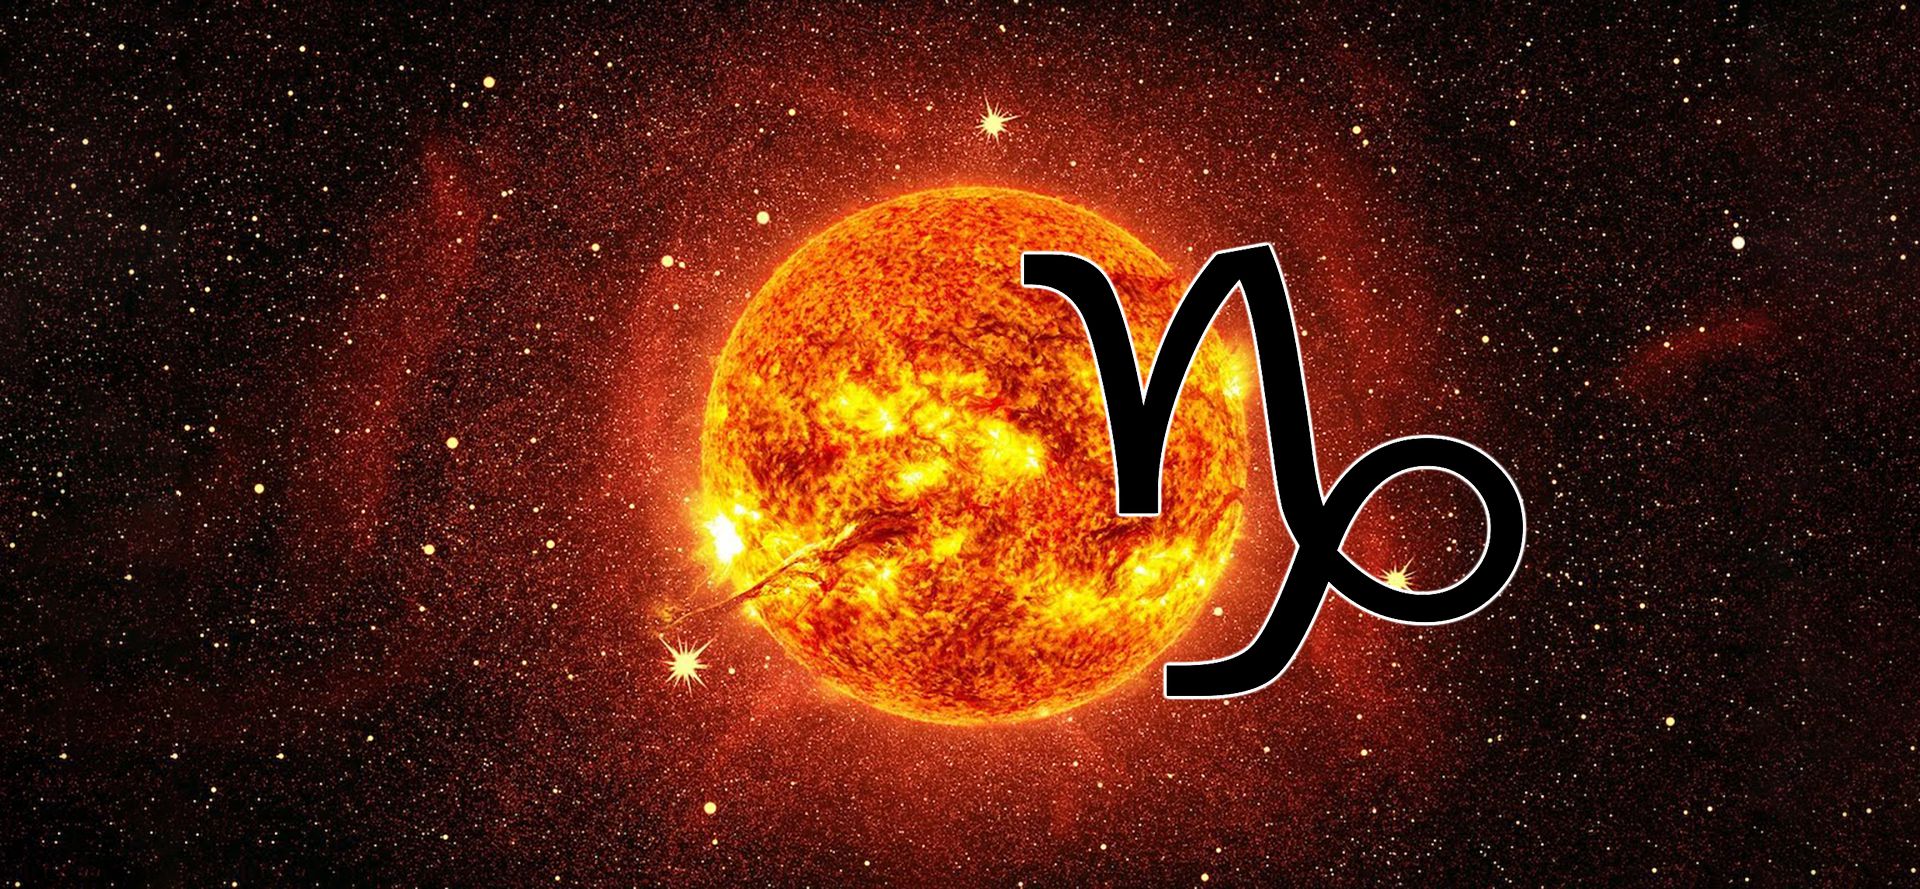 Capricorn sign and Sun.